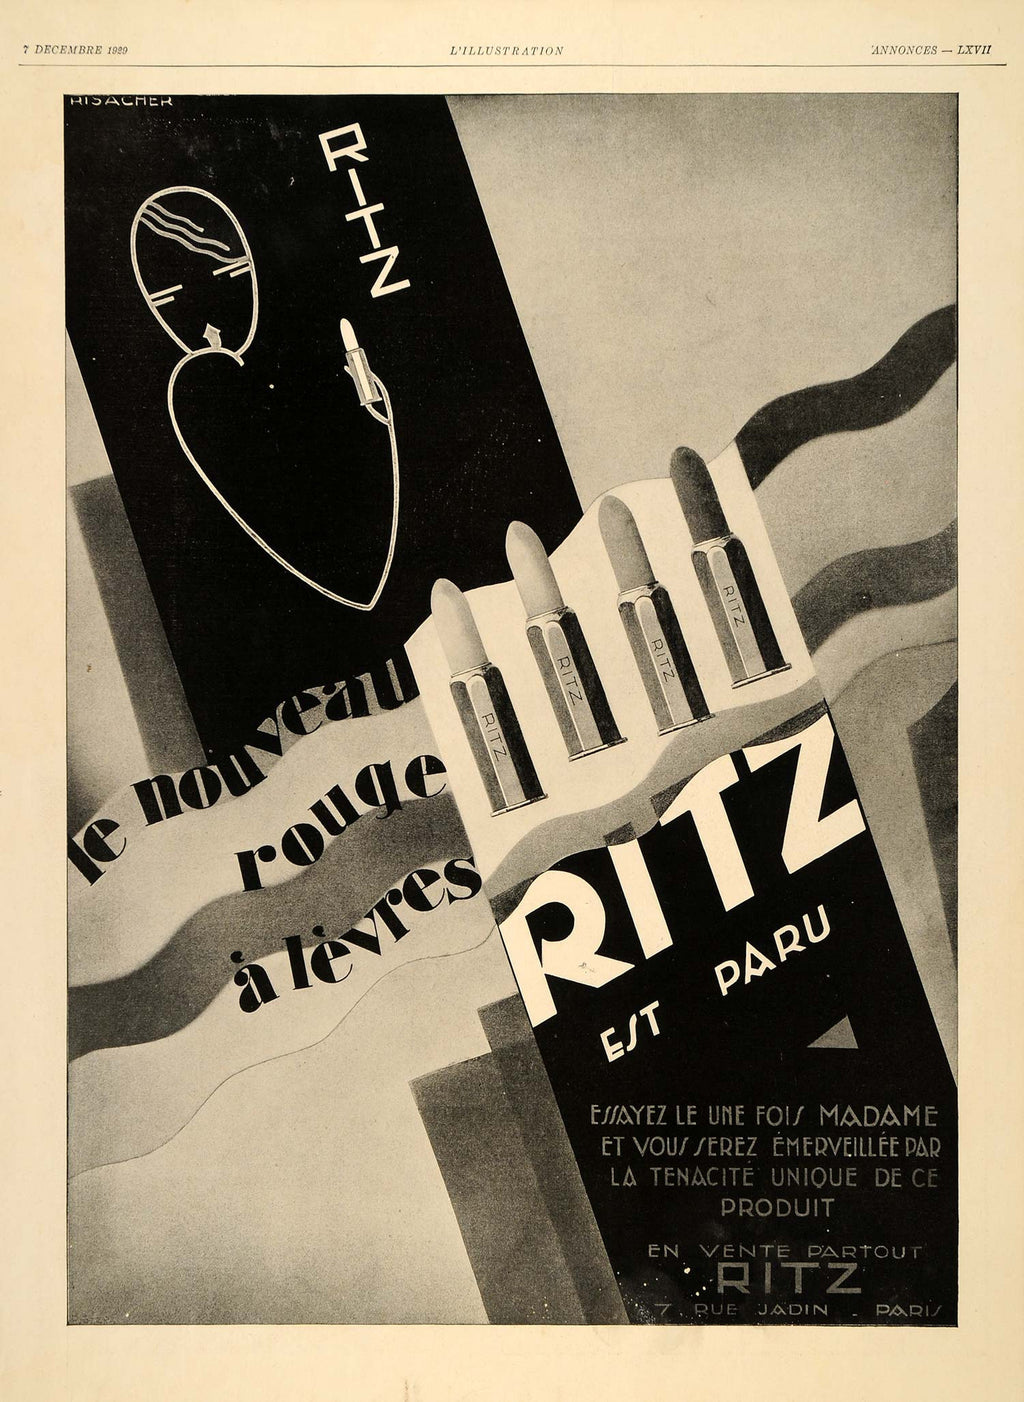 1929 Ad French Rouge Levres Lipstick Ritz Paris Beauty - ORIGINAL ILL3 - Period Paper
